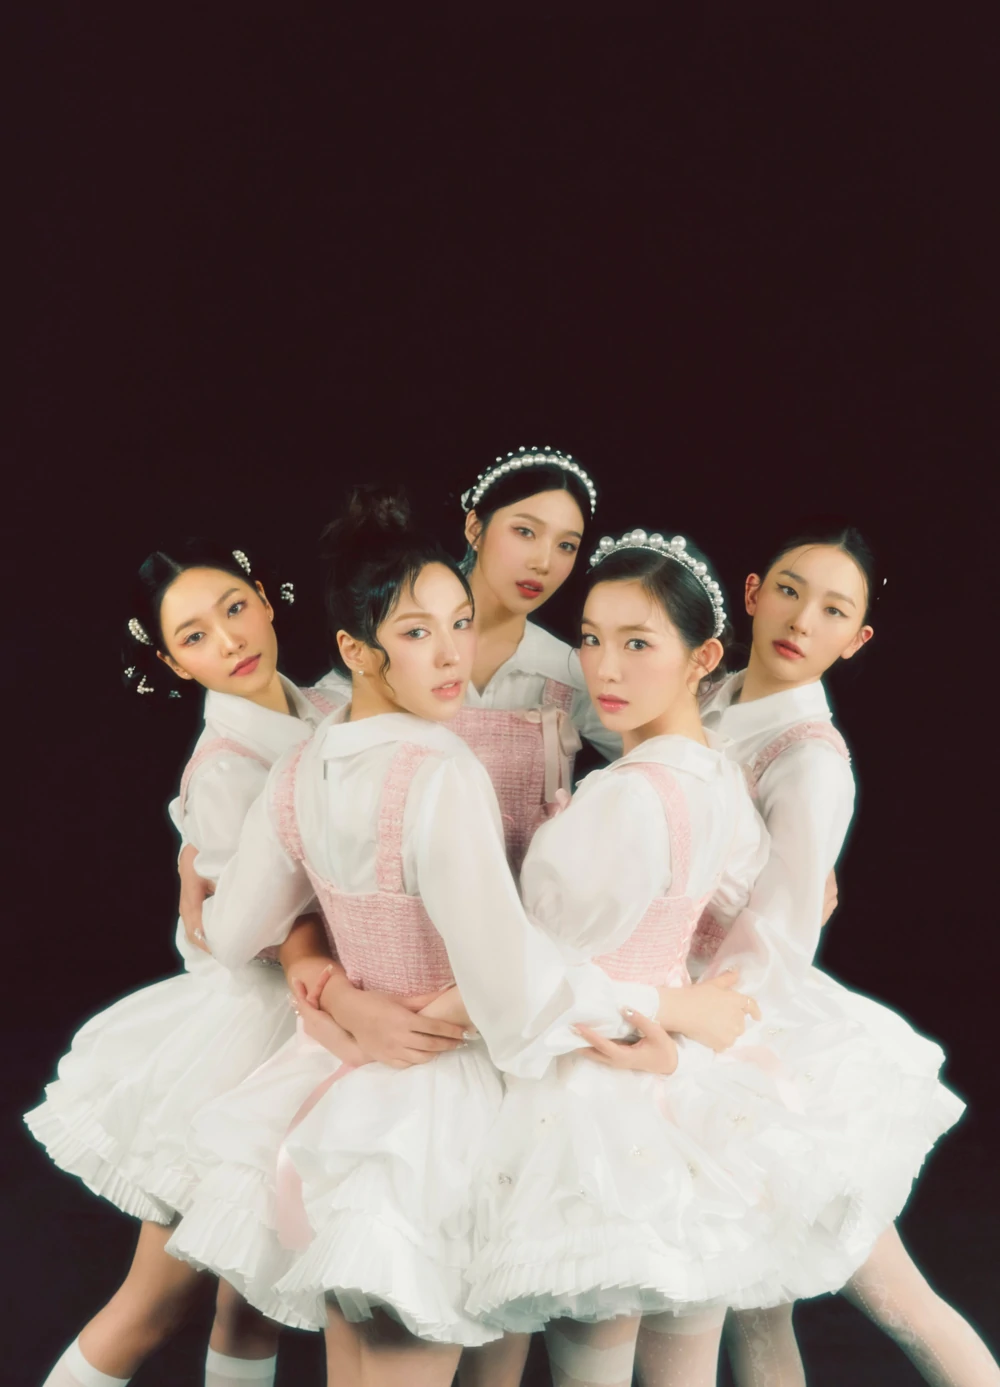 Red Velvet Feel My Rhythm Group Concept Teaser Picture Image Photo Kpop K-Concept 1